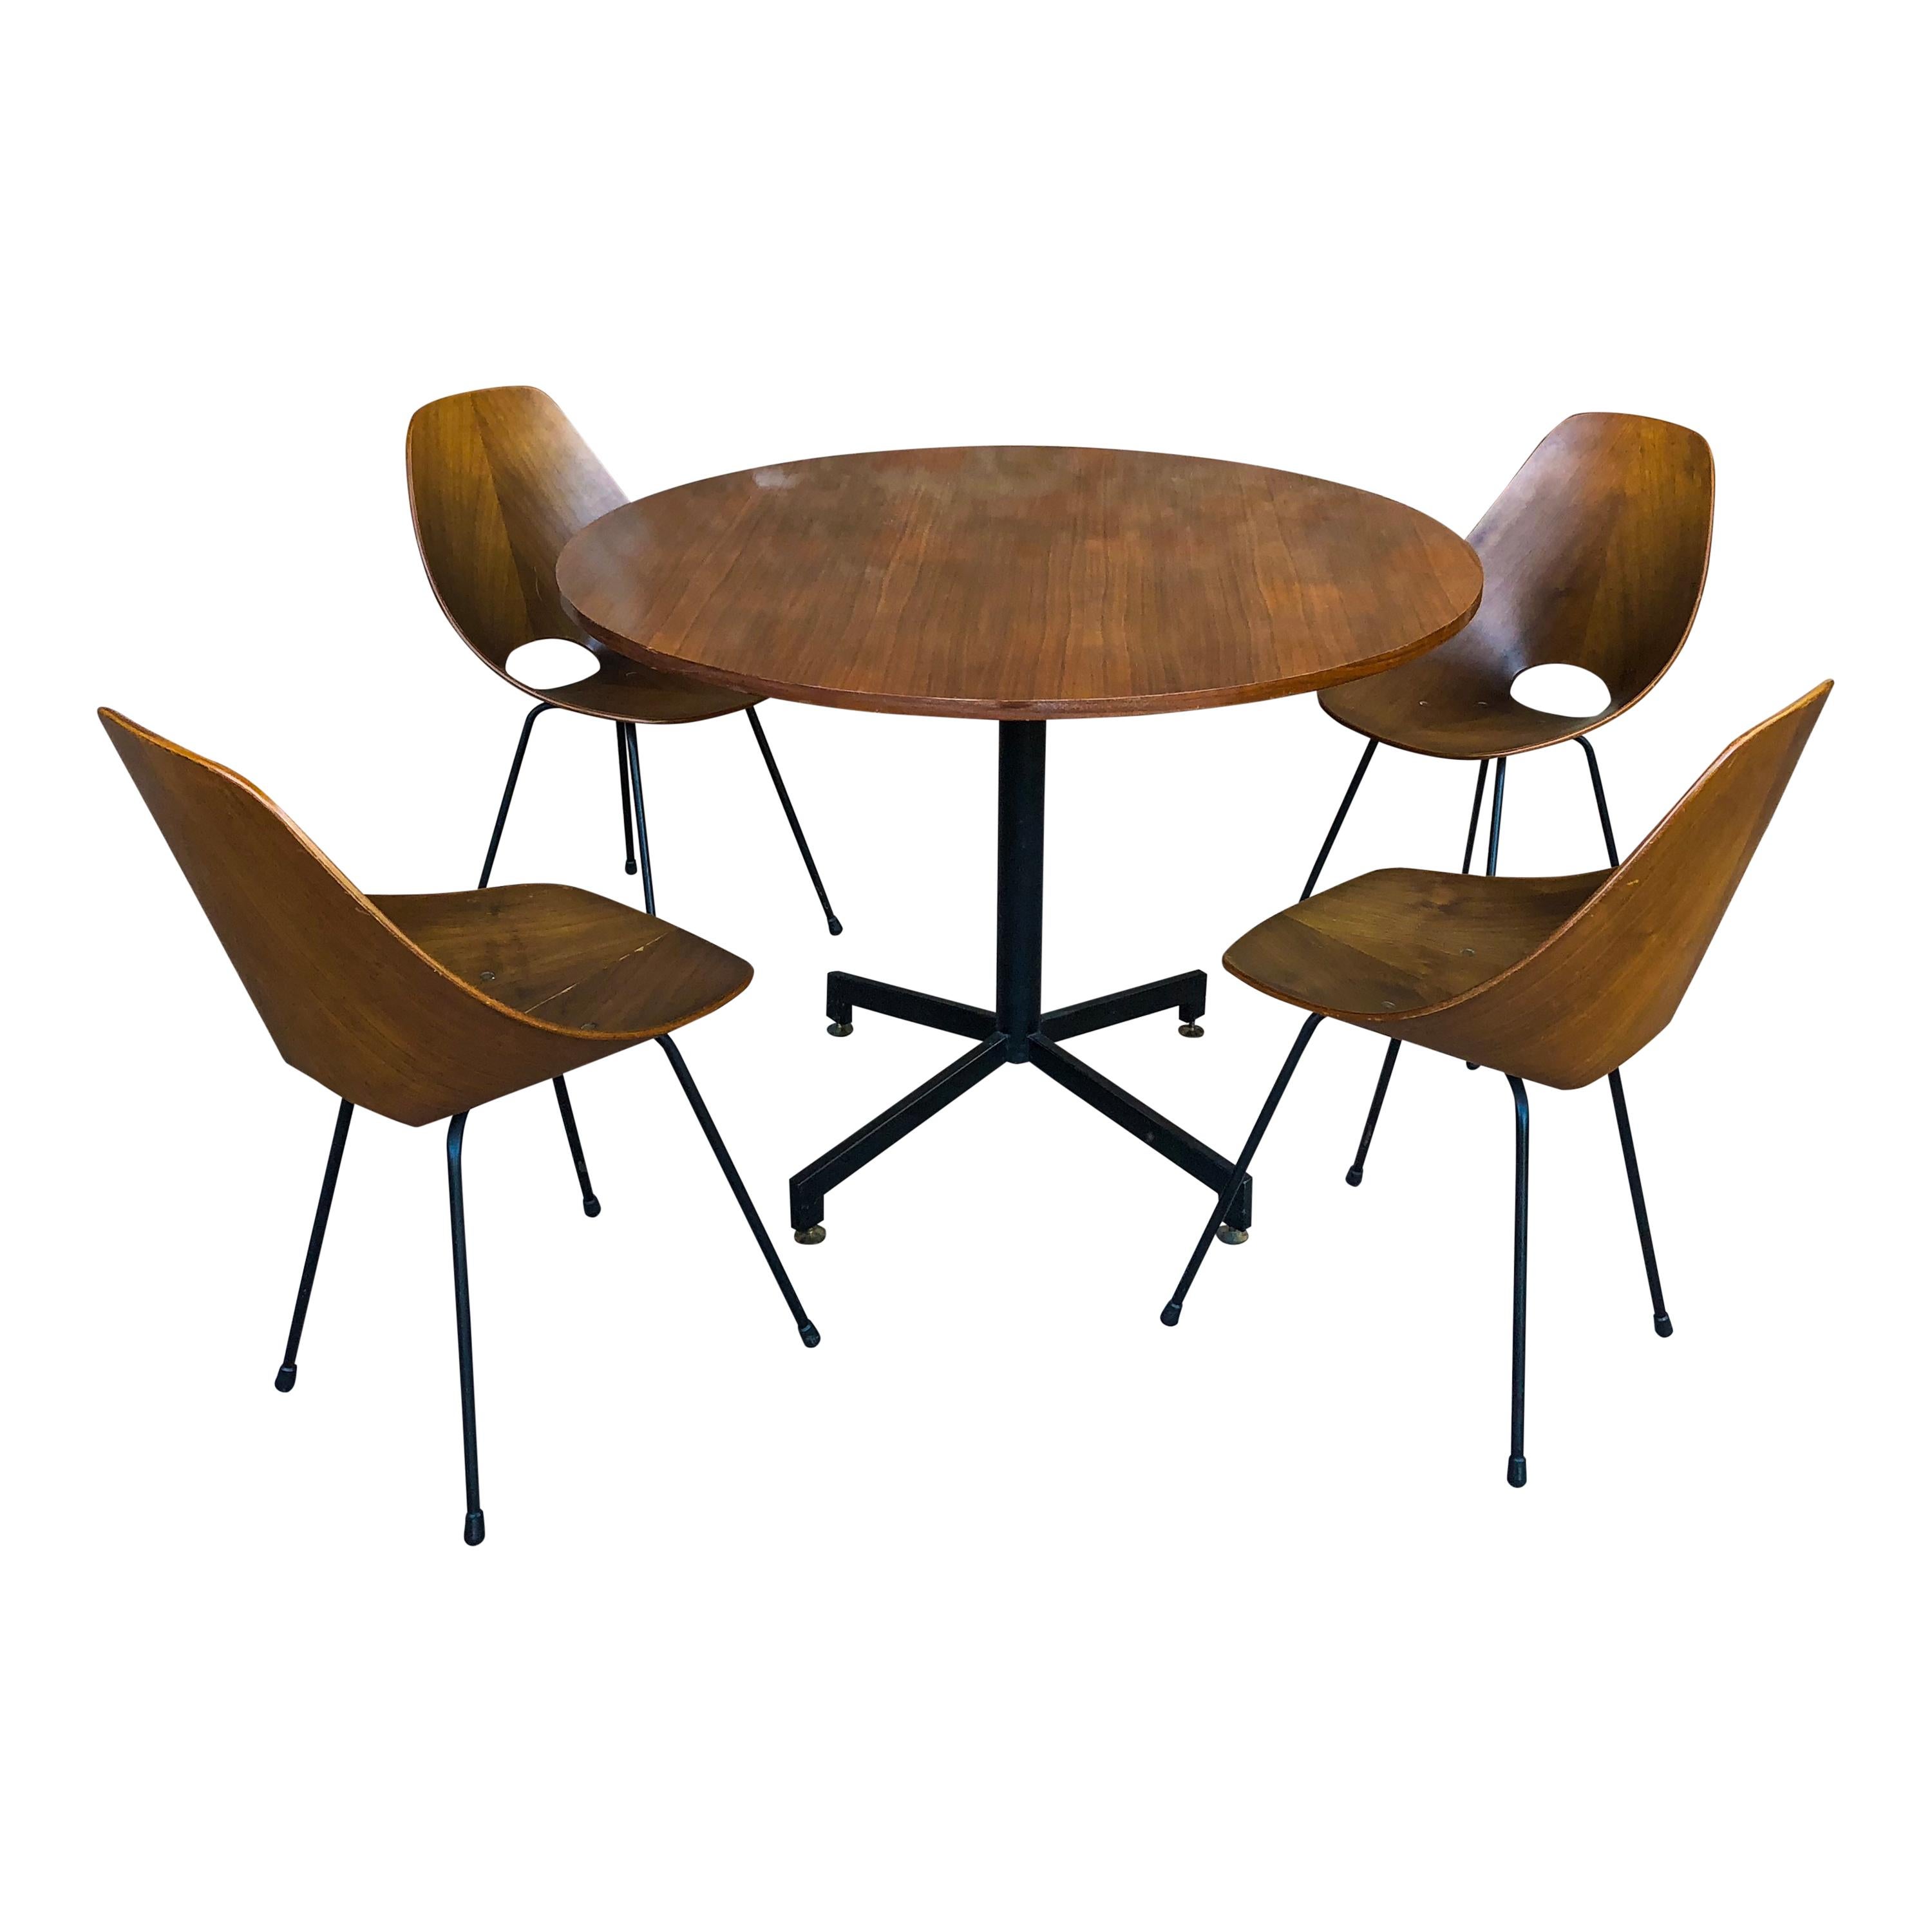 Italian Vittorio Nobili Midcentury Teak “Medea” Dining Room Chairs, 1956, Set of Four For Sale